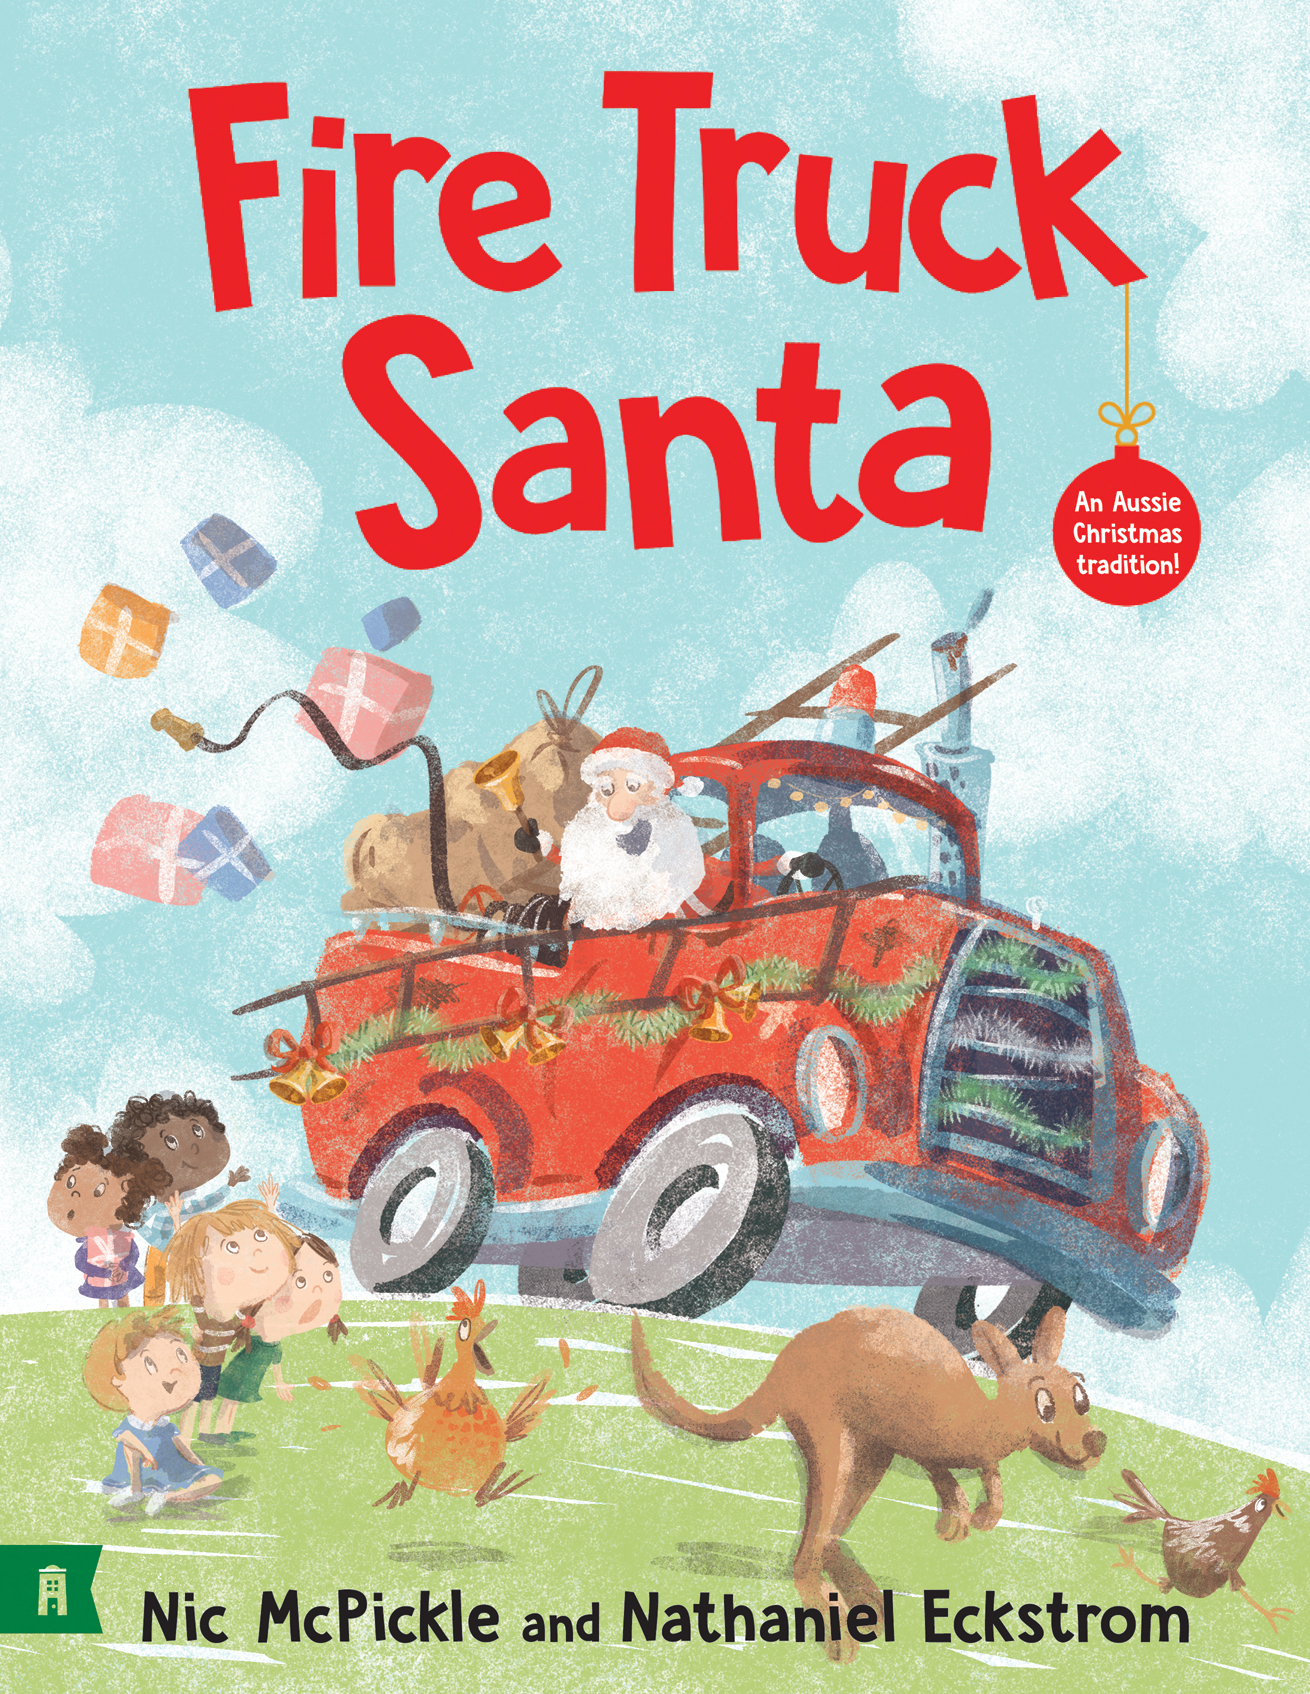 Fire truck Santa book cover.